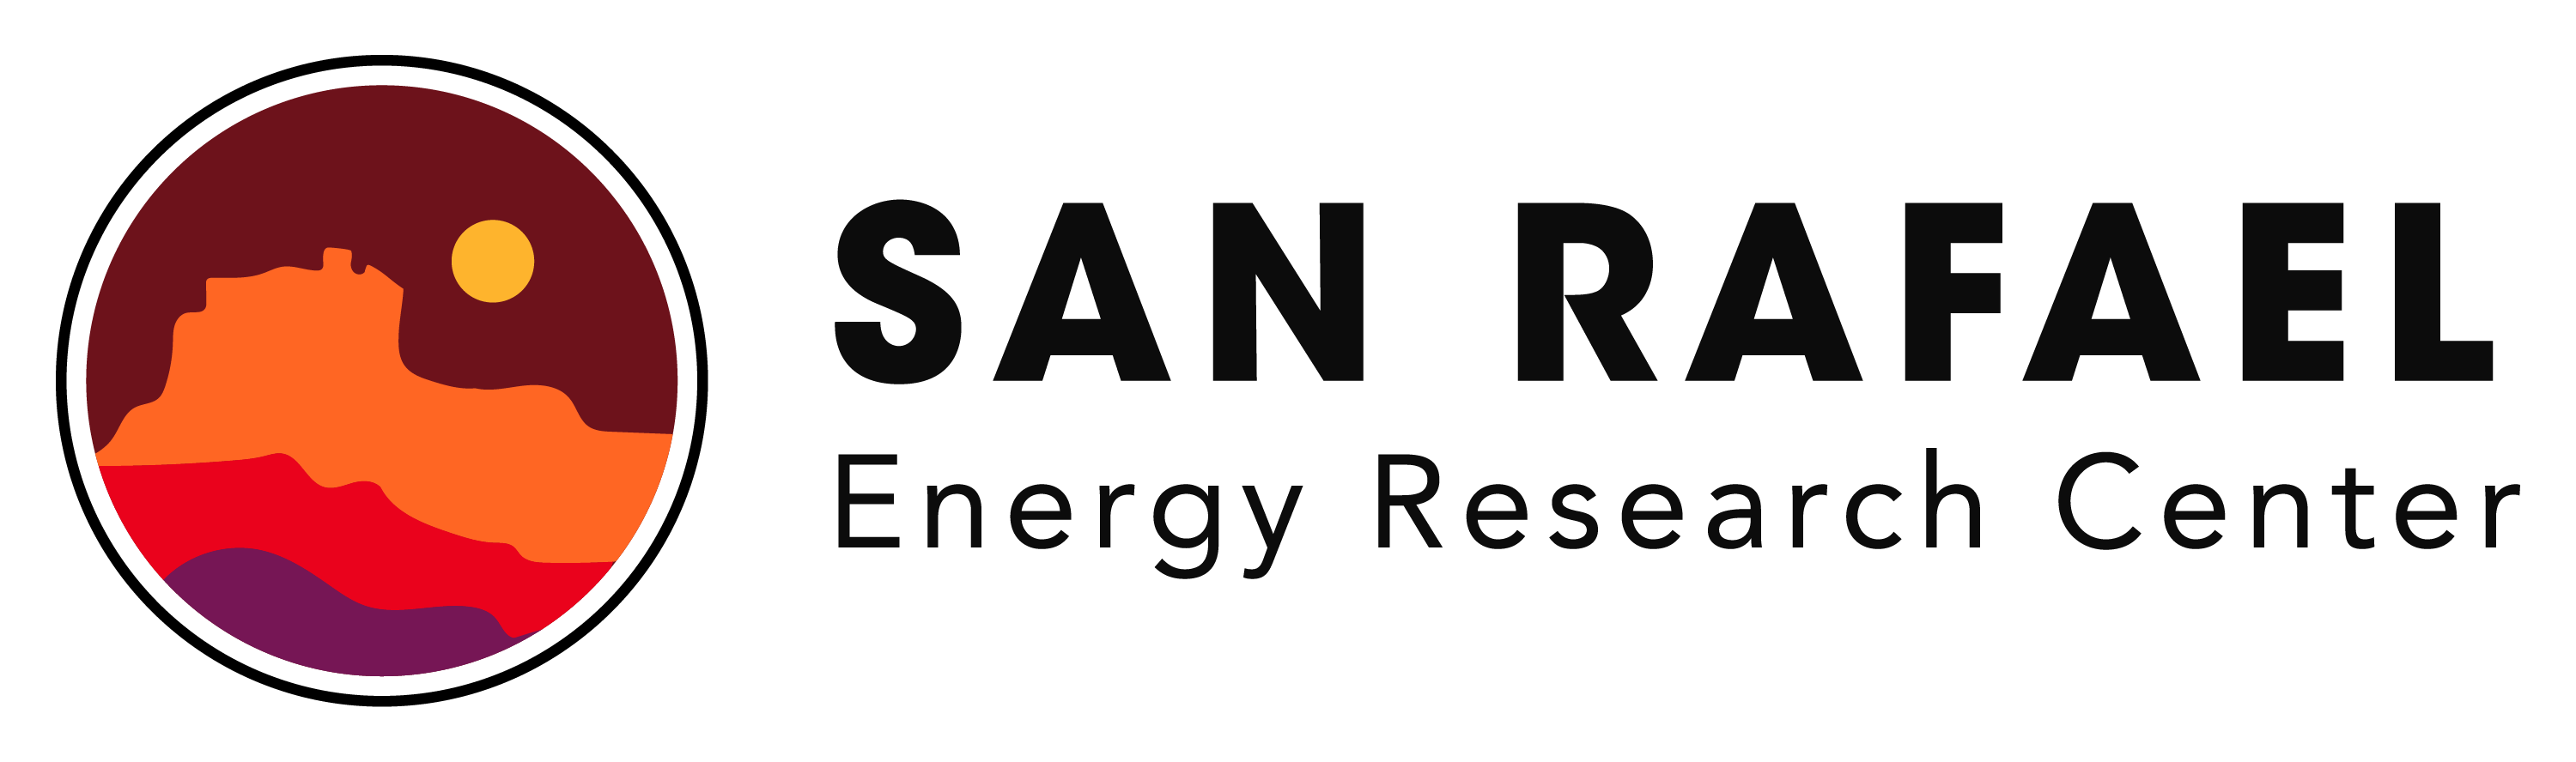 San Rafael Energy Research Center